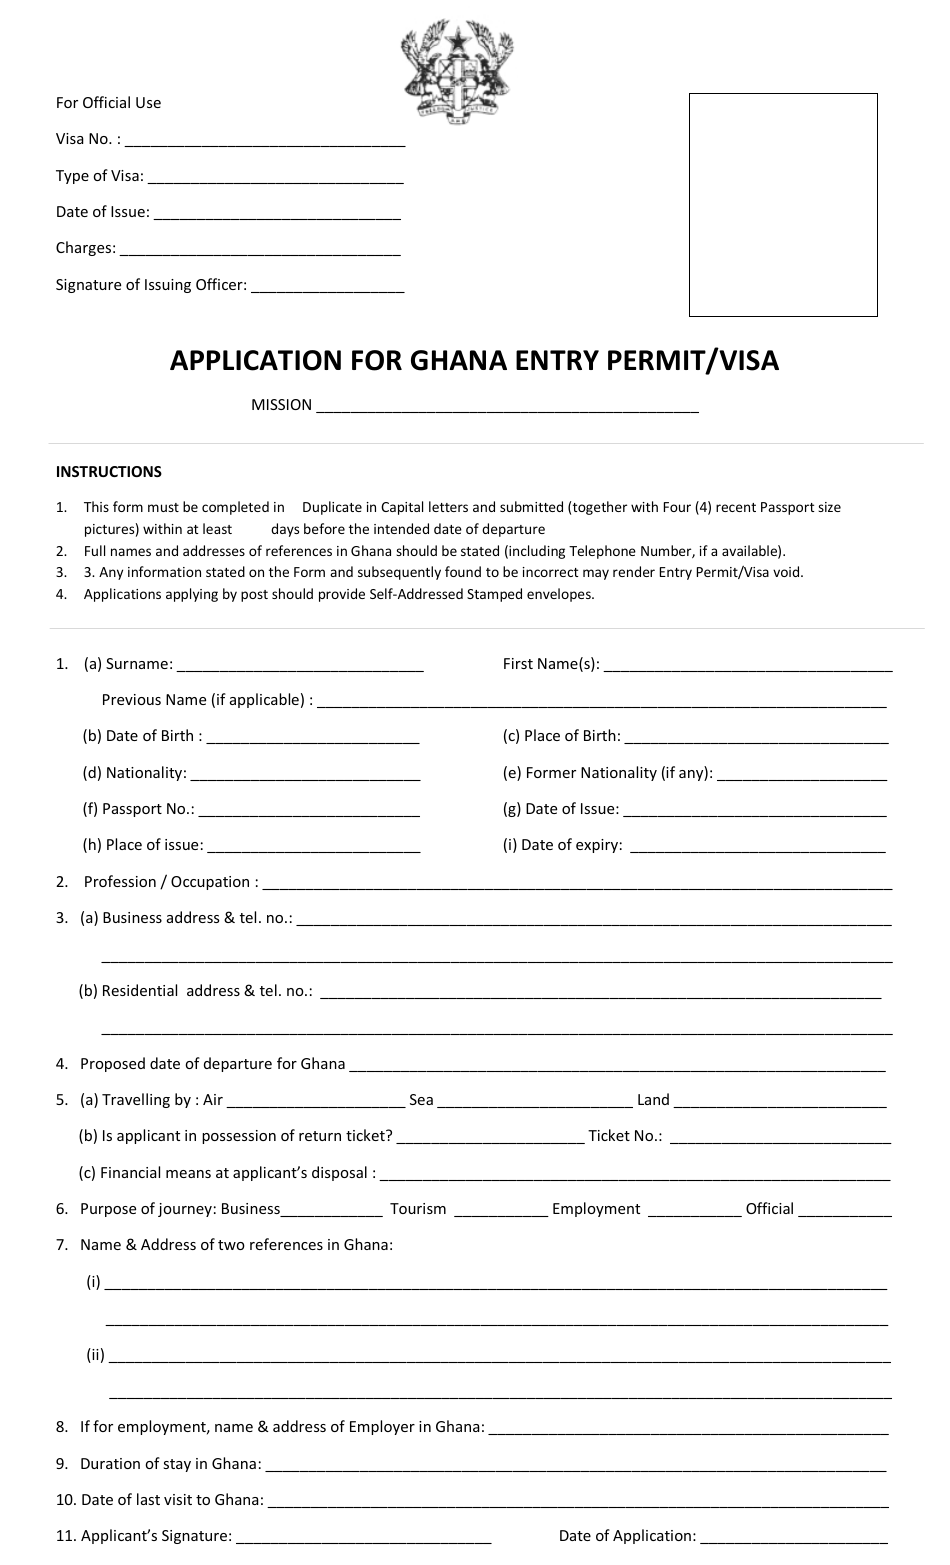 application-form-for-ghana-entry-permit-visa-ghana-high-commission